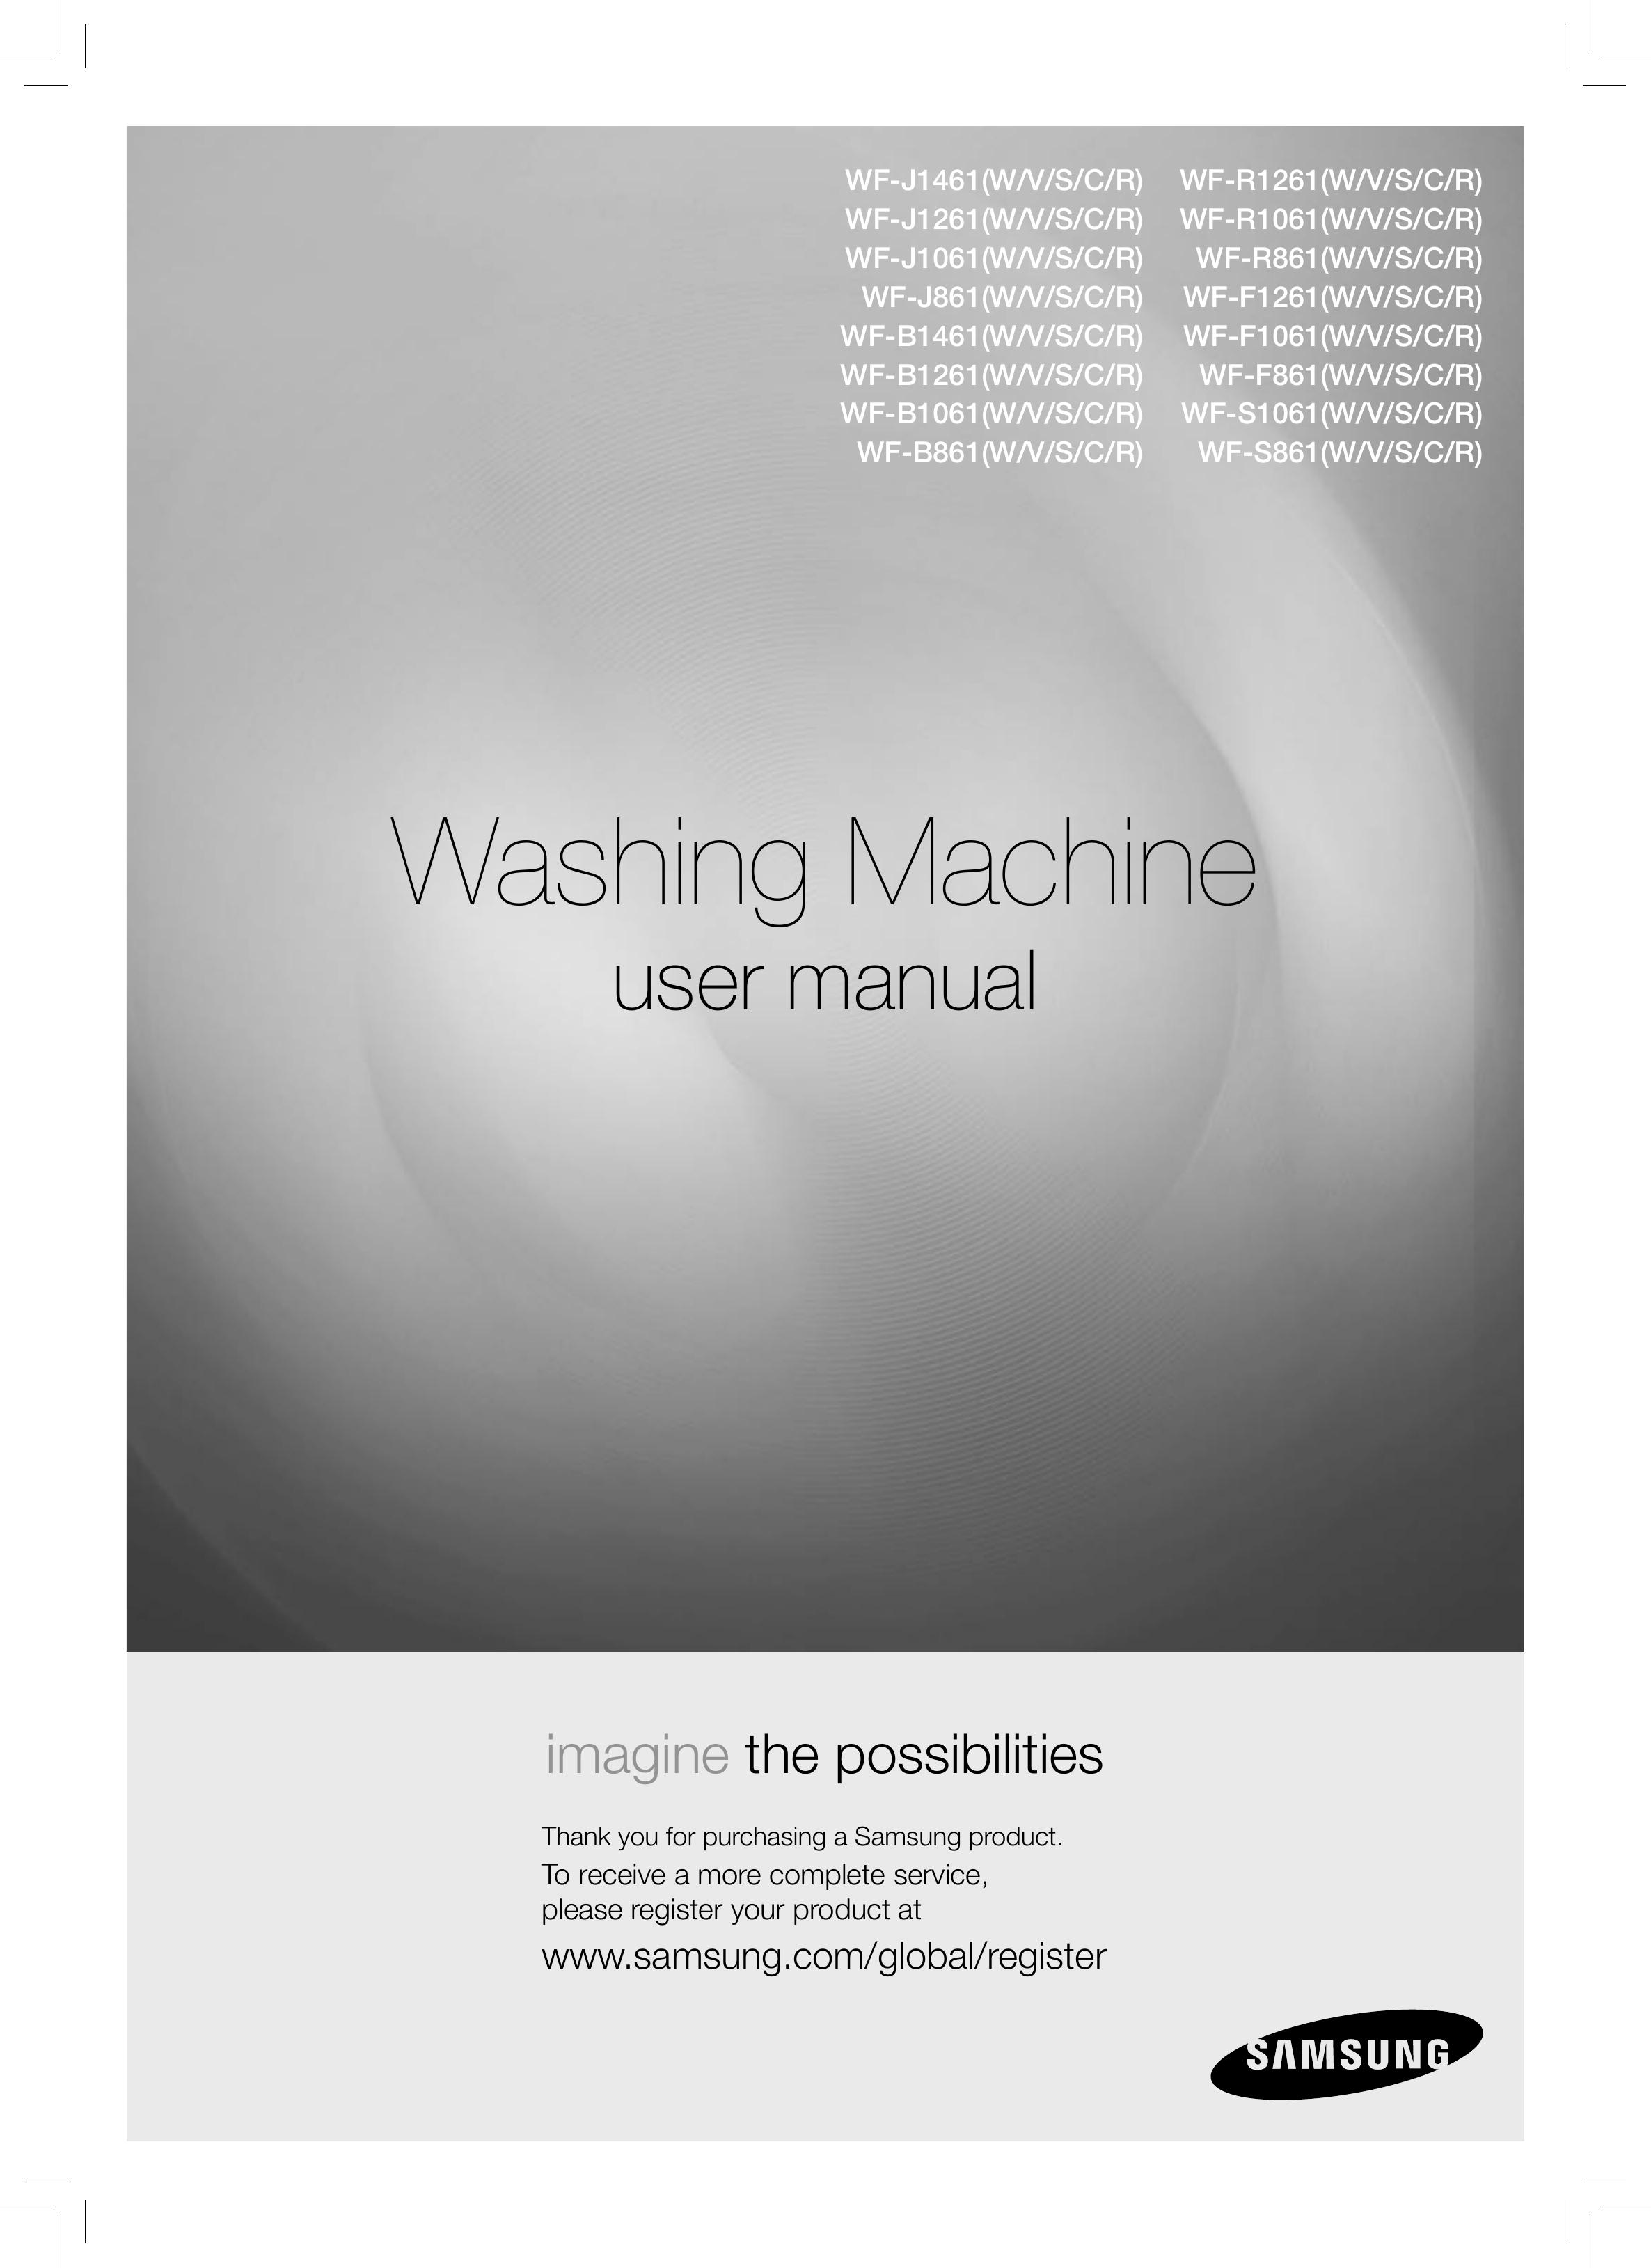 Samsung WF-F1261 Washer/Dryer User Manual